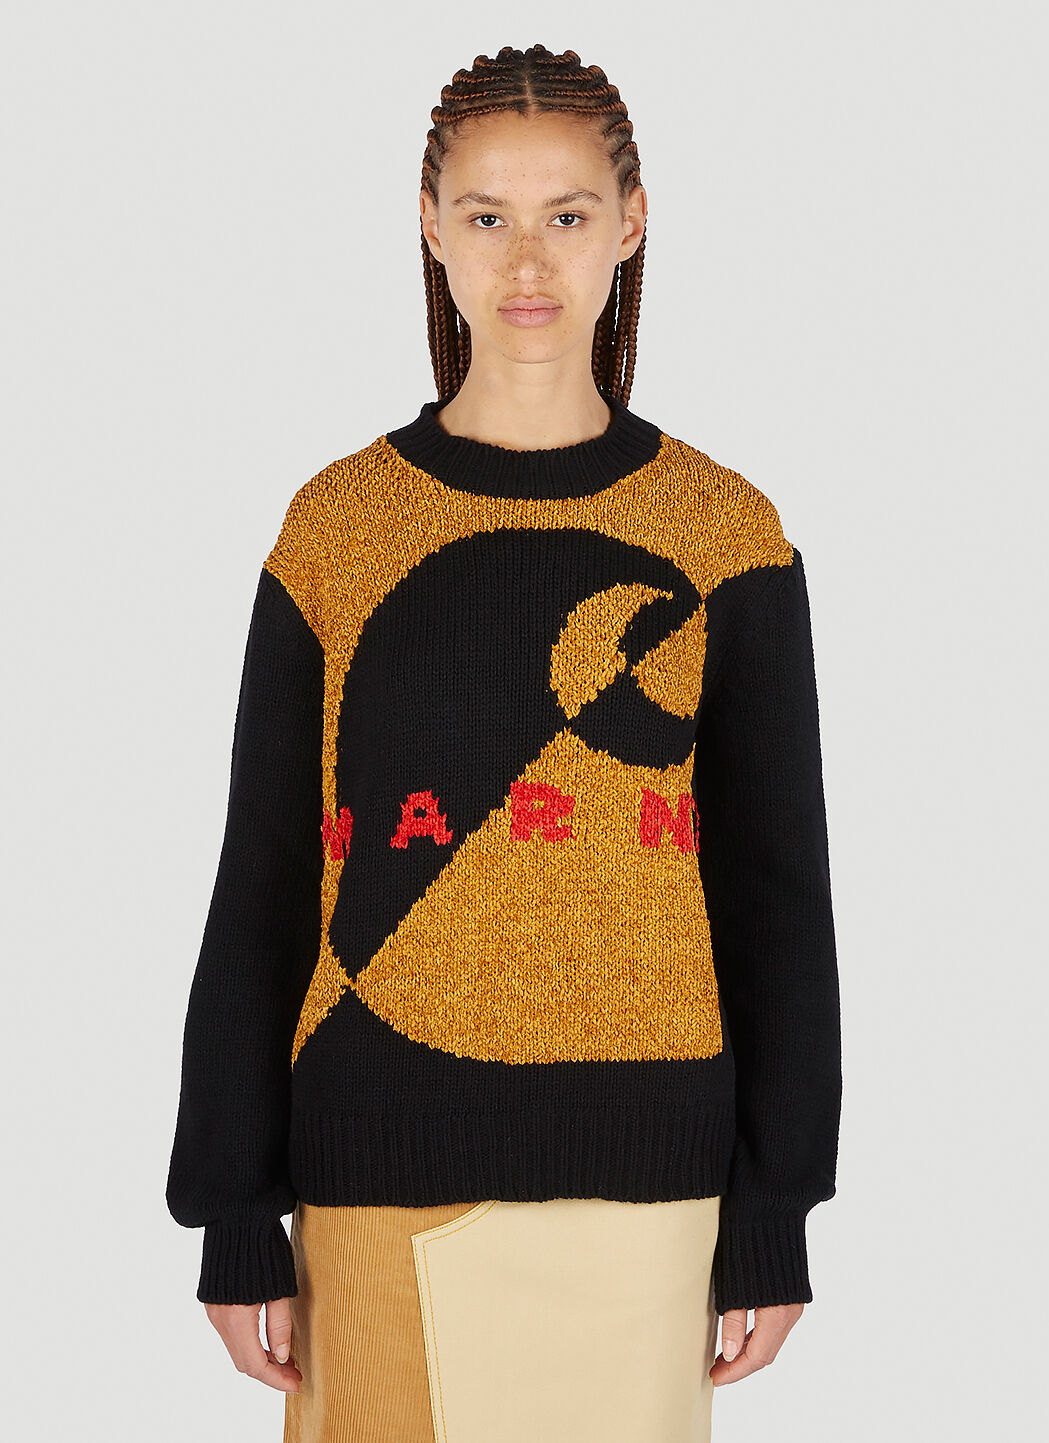 Marni x Carhartt Blended Logo Intarsia Sweater Black mca0250007